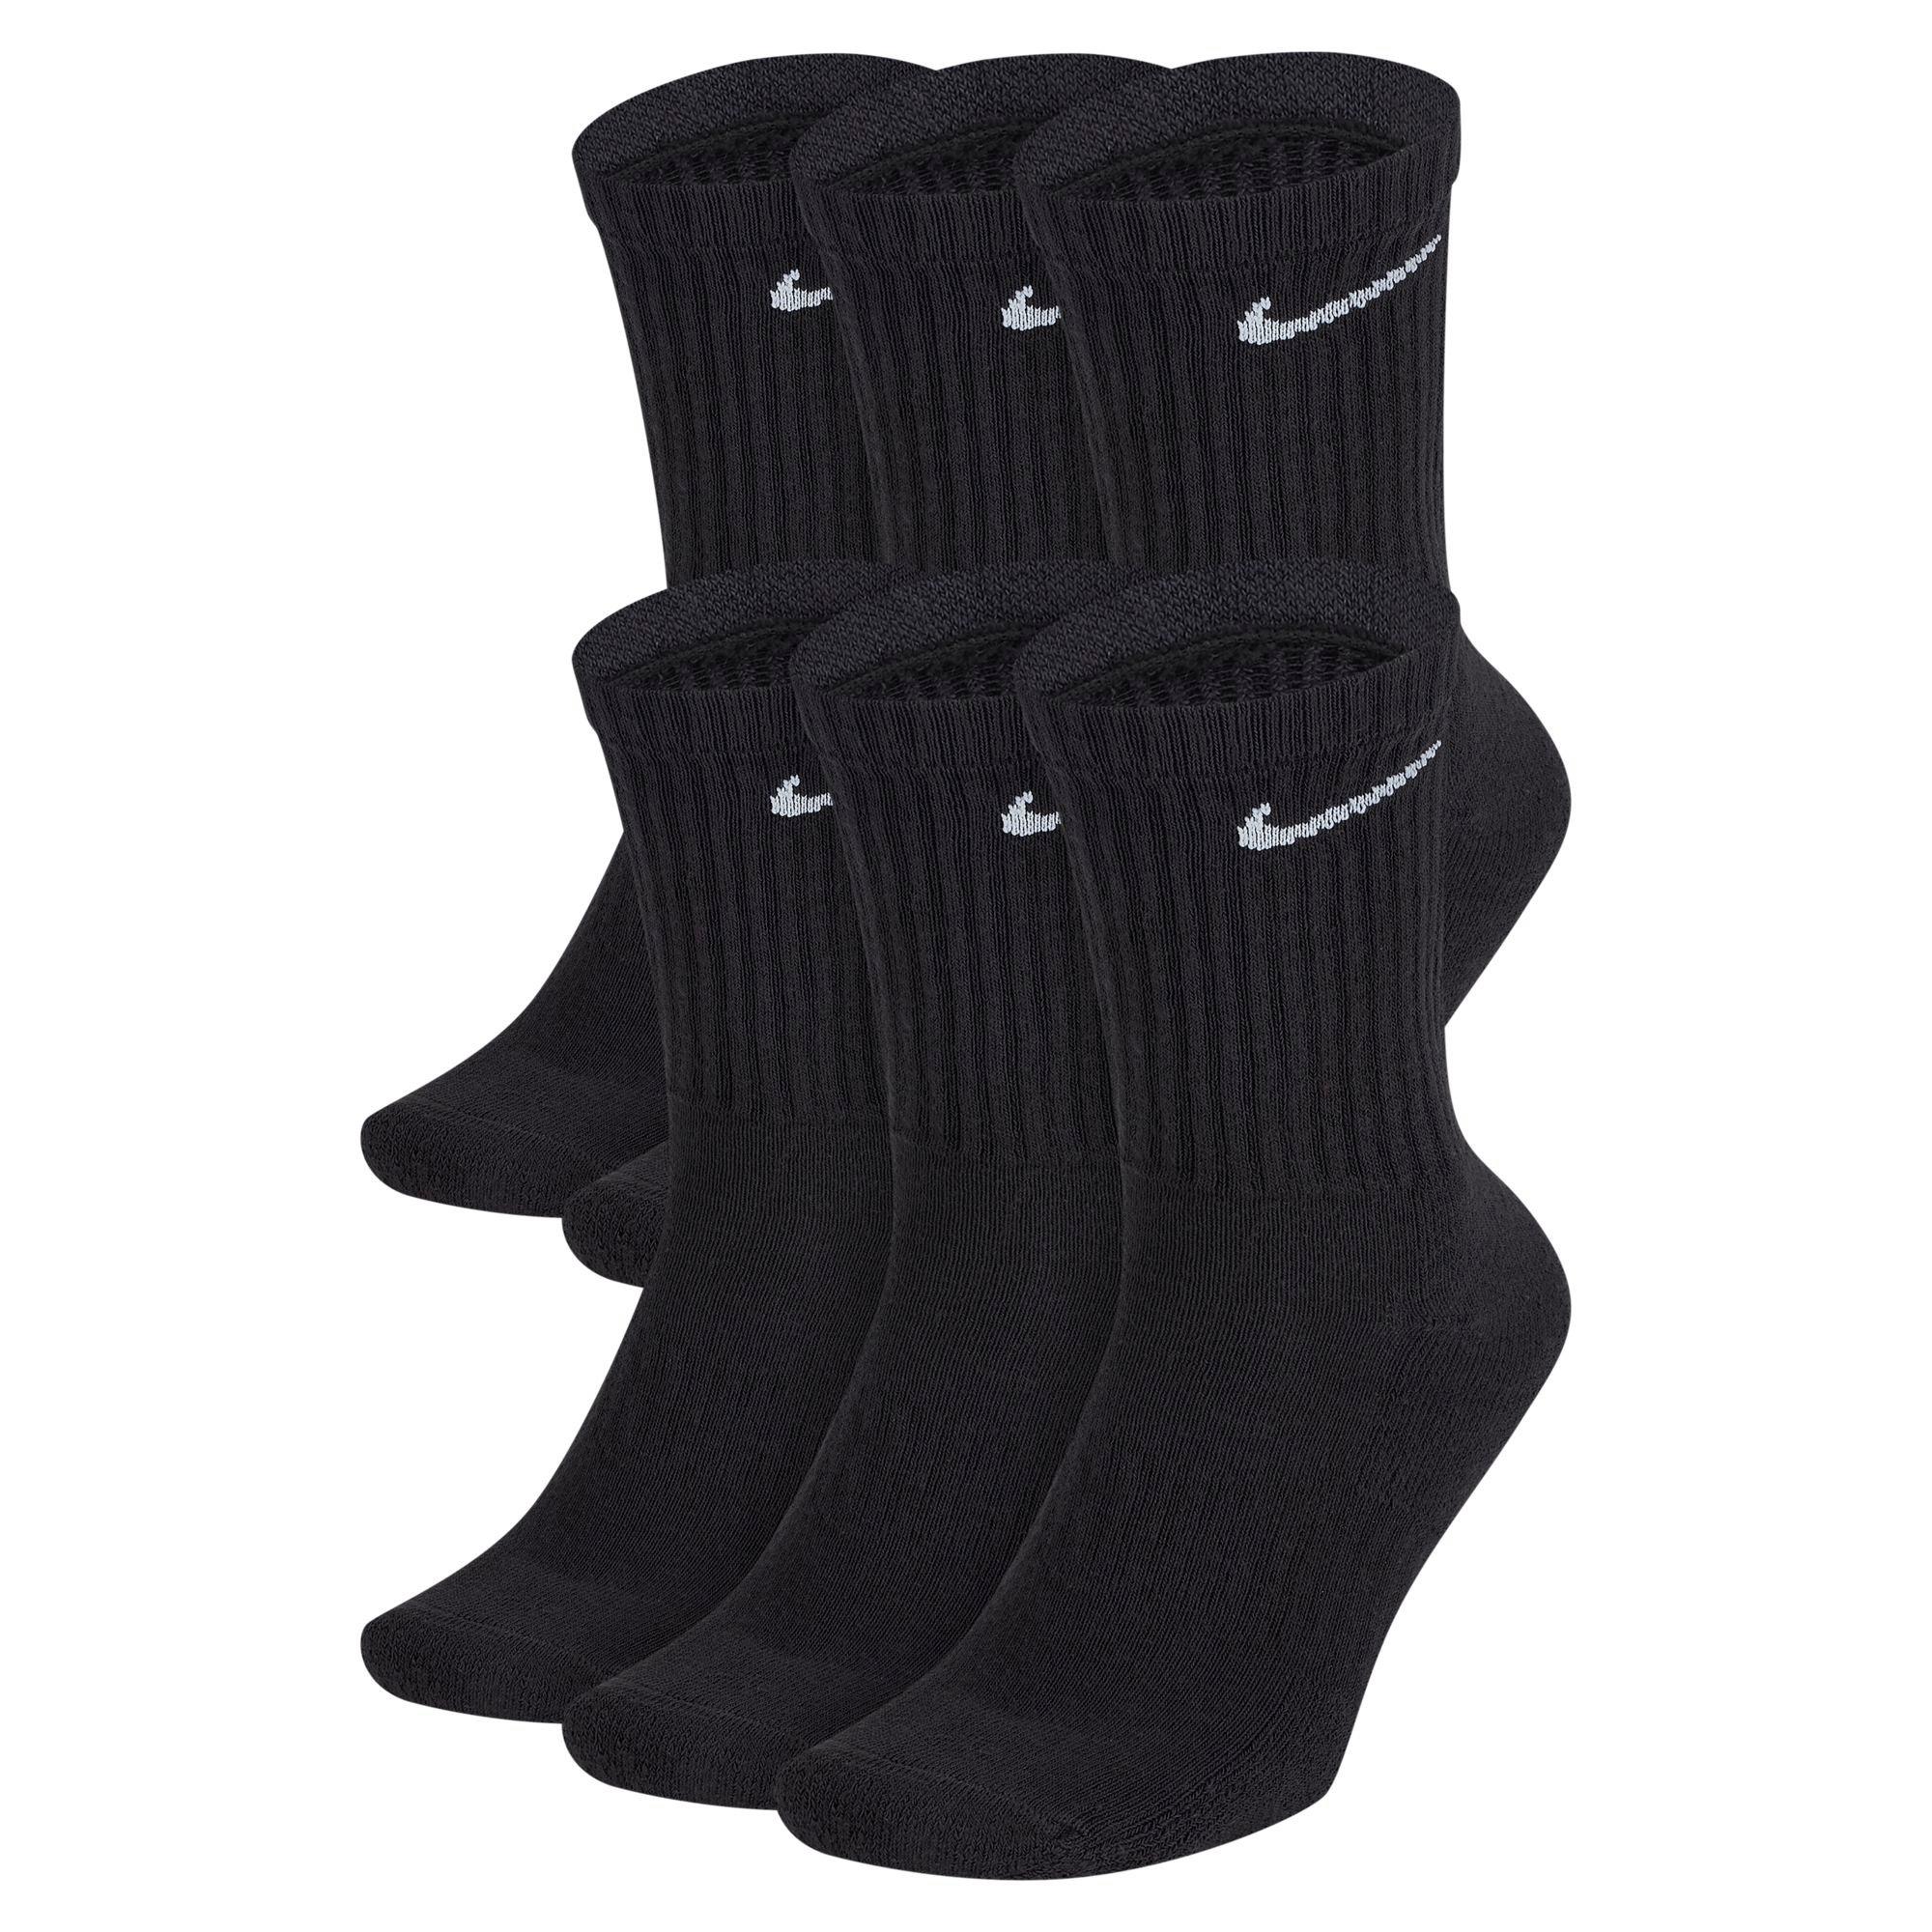 NBA Underwear & Socks for Men - Poshmark